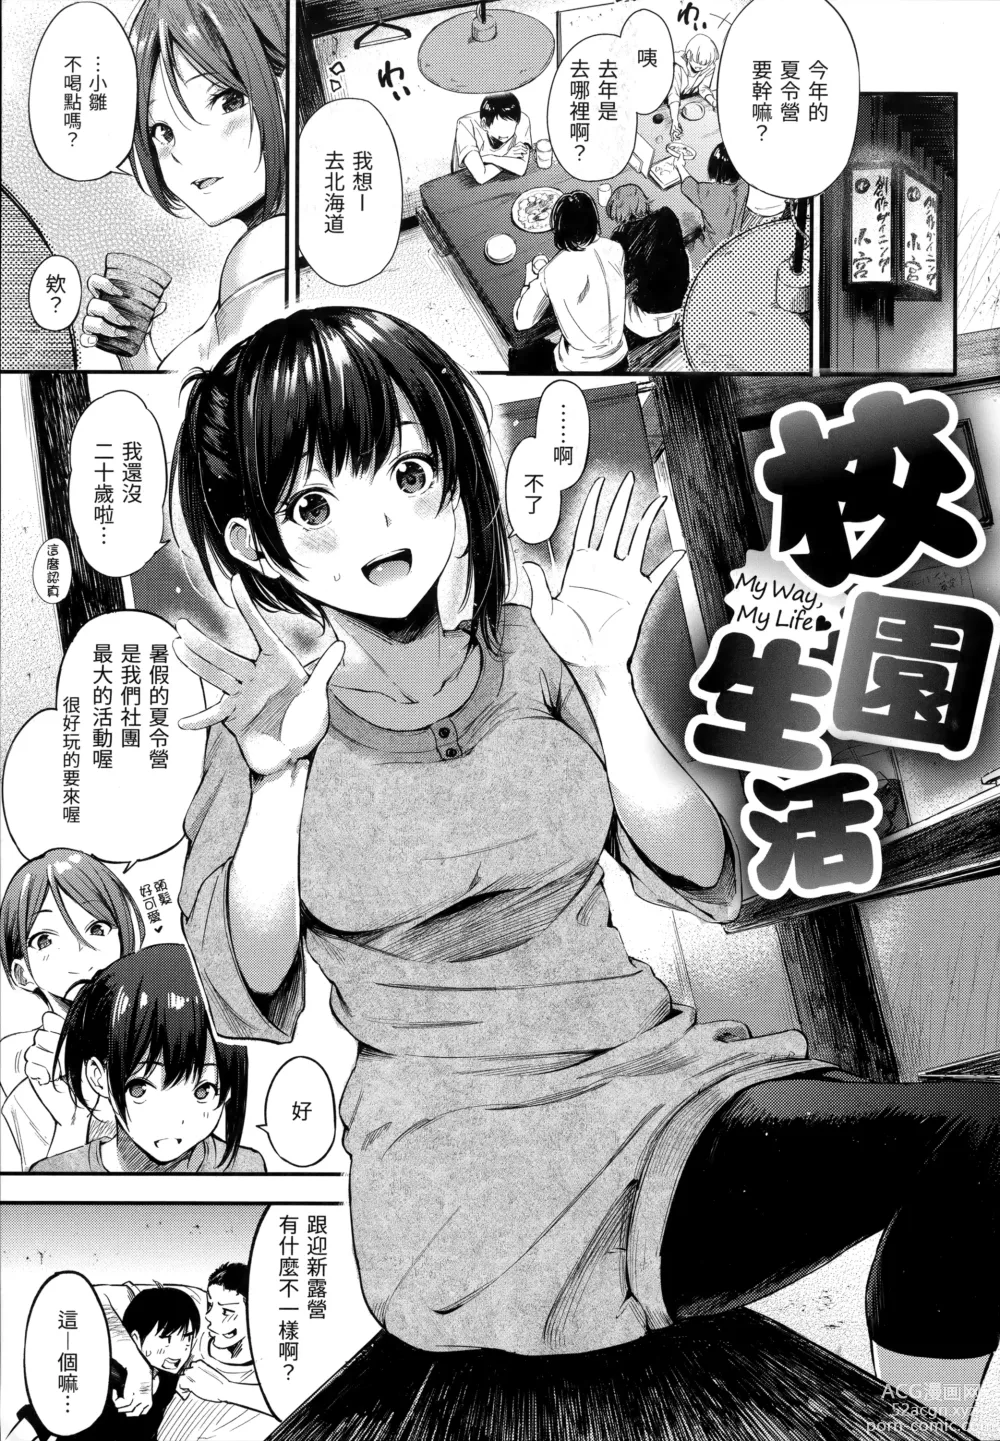 Page 7 of manga 祕密x祕密 (uncensored)